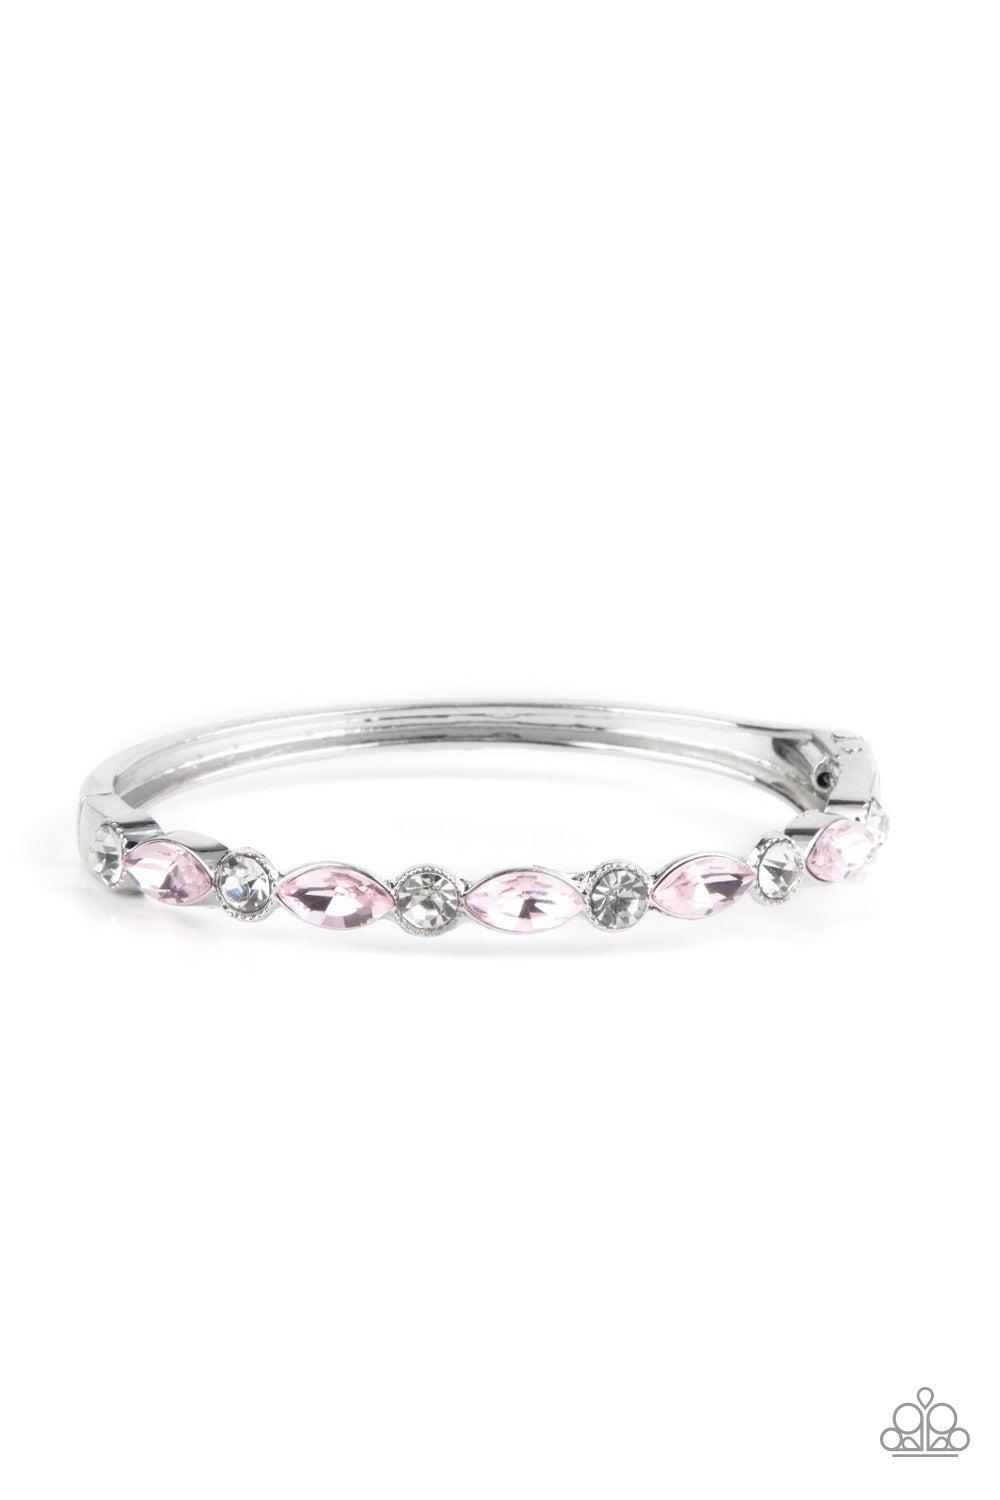 Petitely Powerhouse Pink Rhinestone Bracelet - Paparazzi Accessories- lightbox - CarasShop.com - $5 Jewelry by Cara Jewels